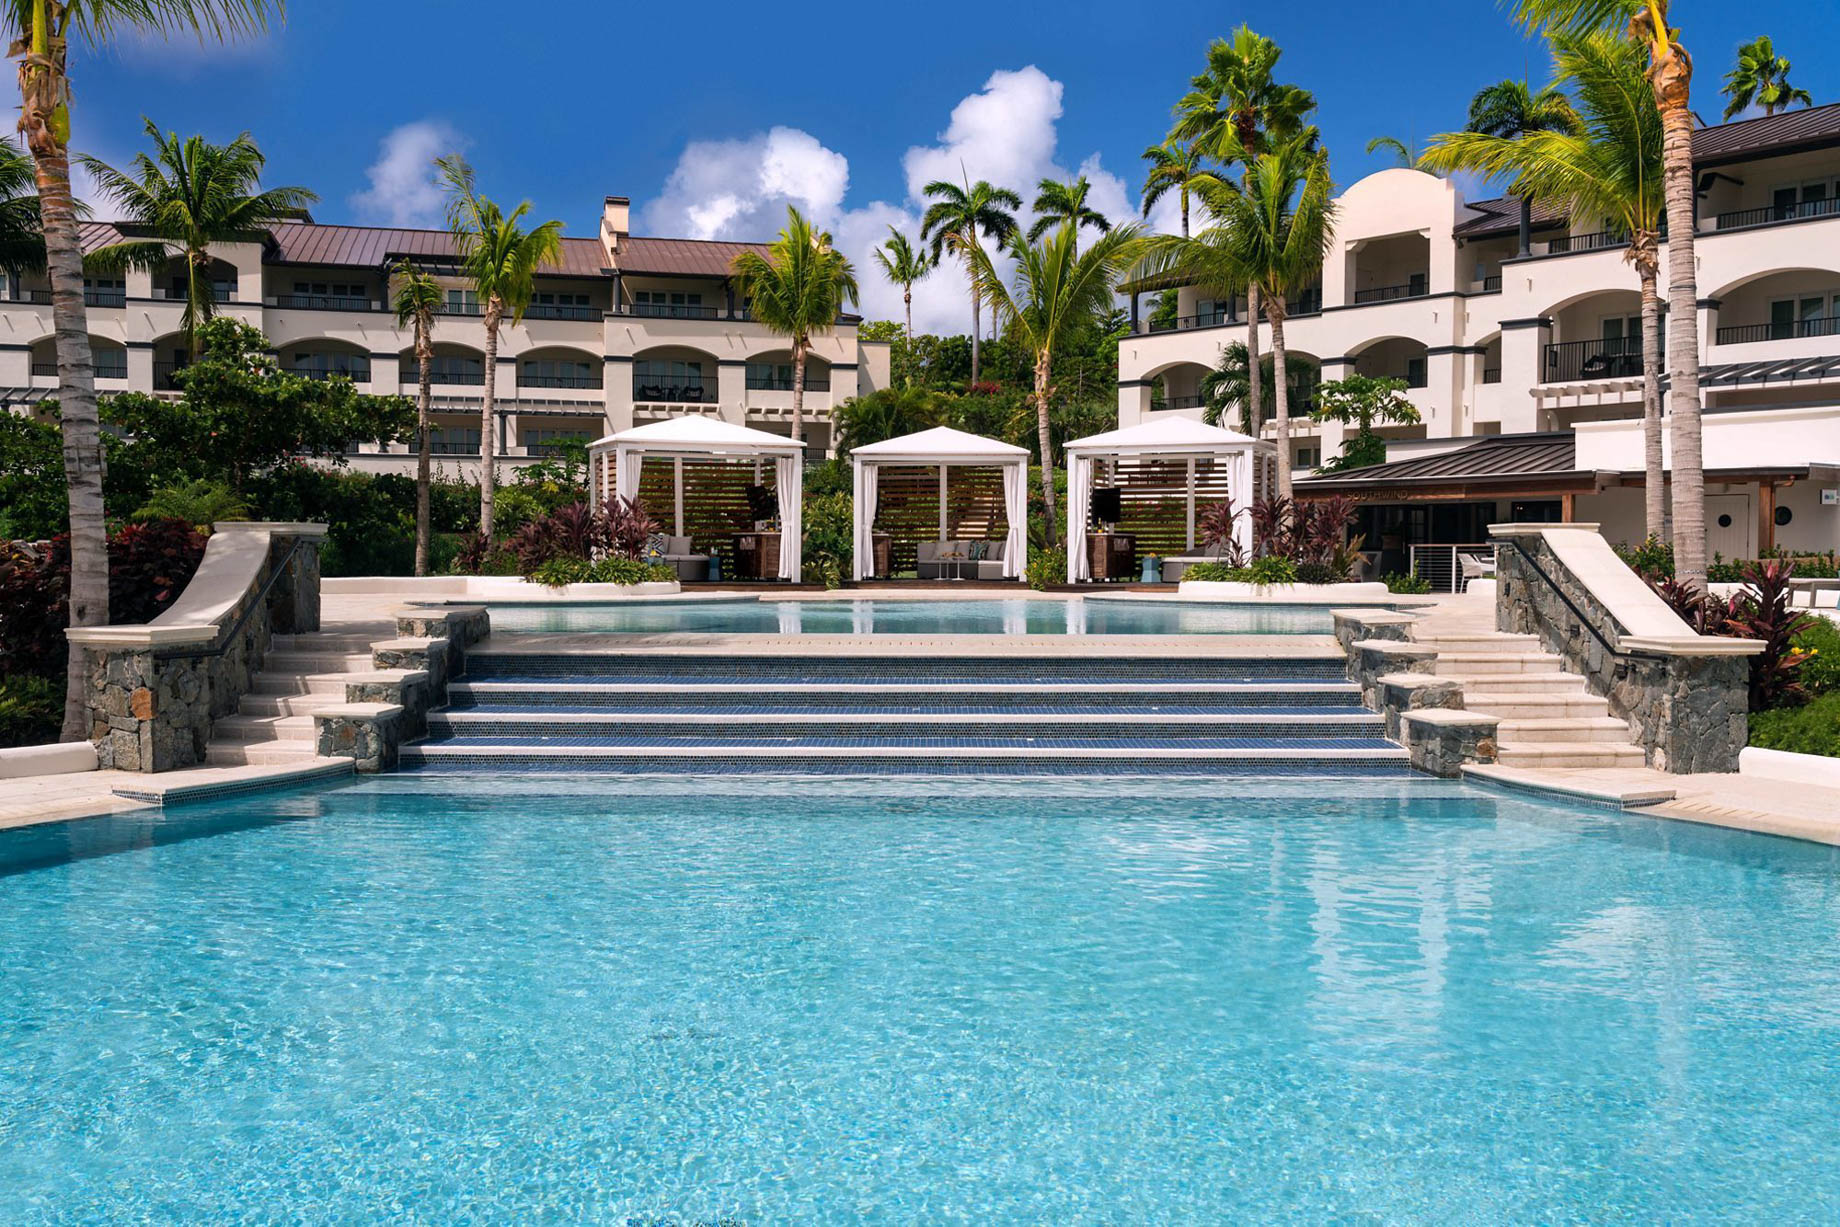 The Ritz-Carlton, St. Thomas Resort - St. Thomas, U.S. Virgin Islands - Exterior Pool